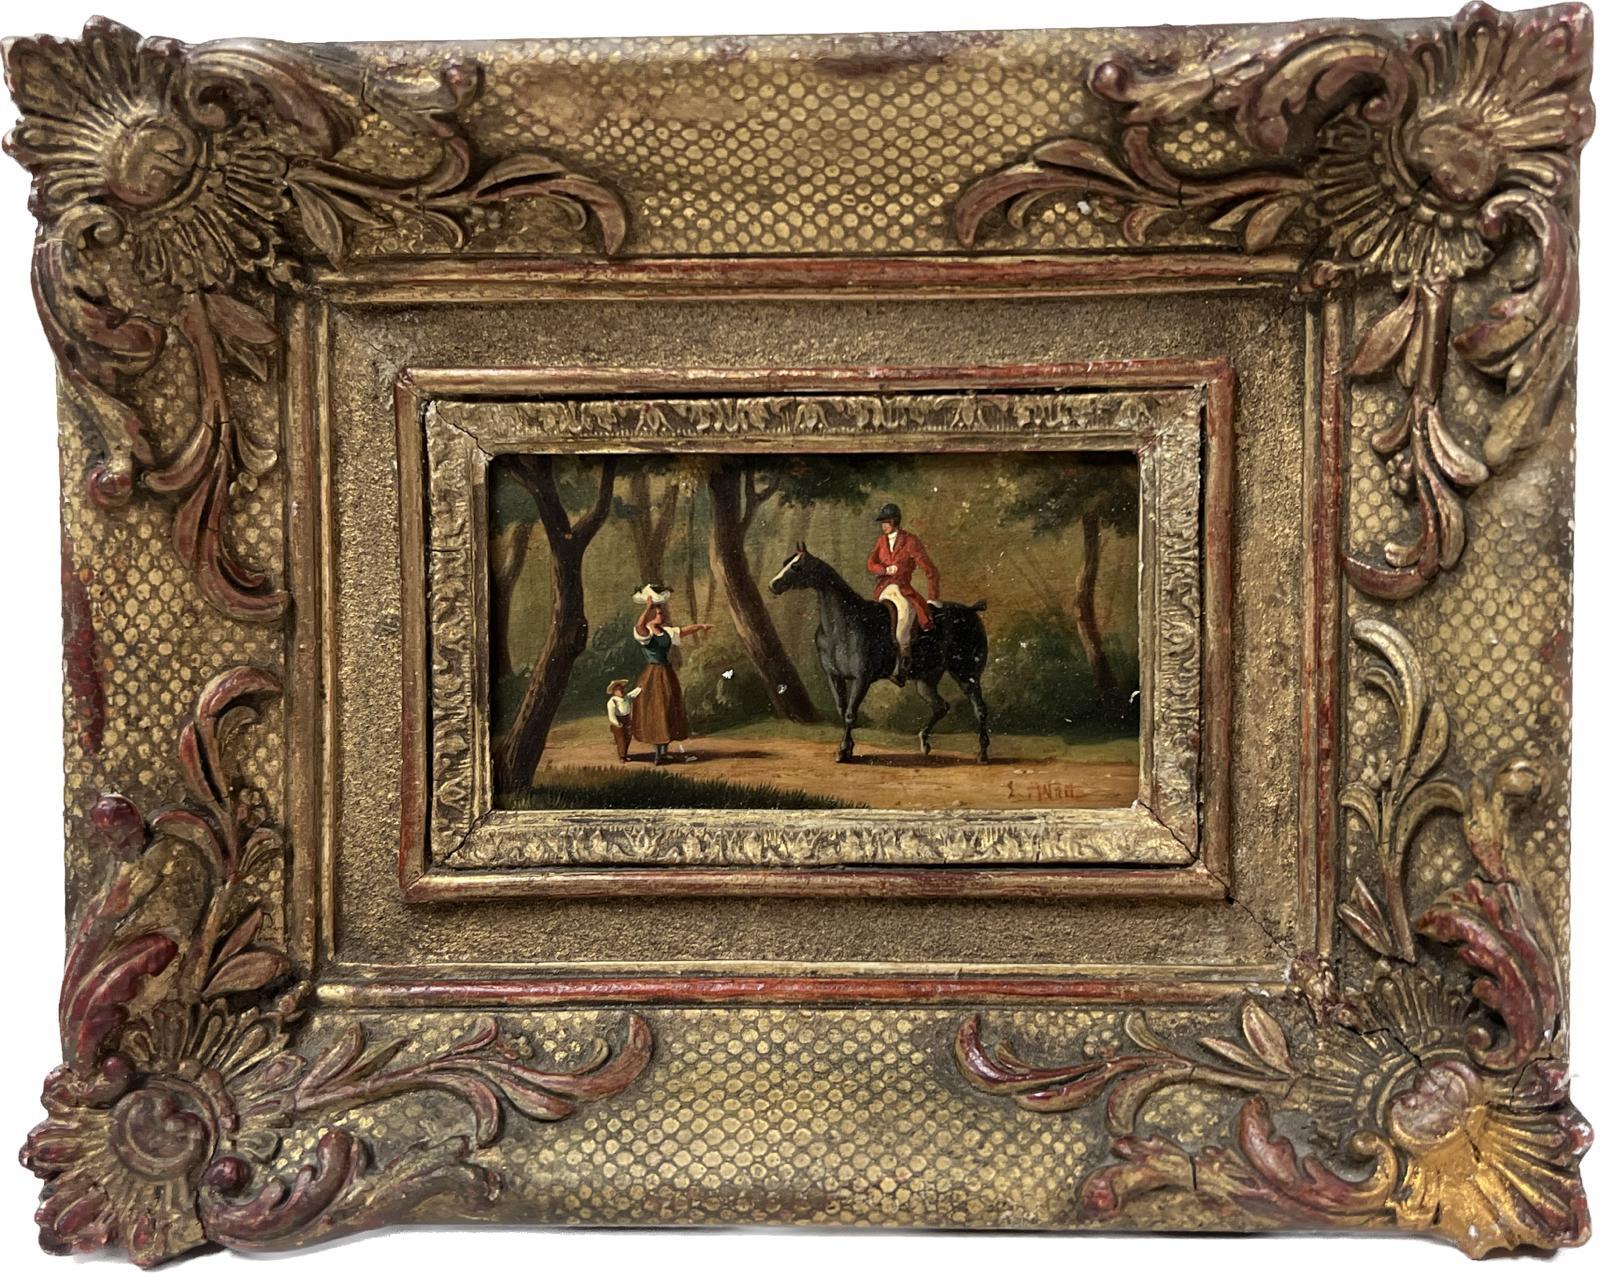 French School Landscape Painting - 19th Century French Oil Huntsman in Wooded Landscape on Horseback framed